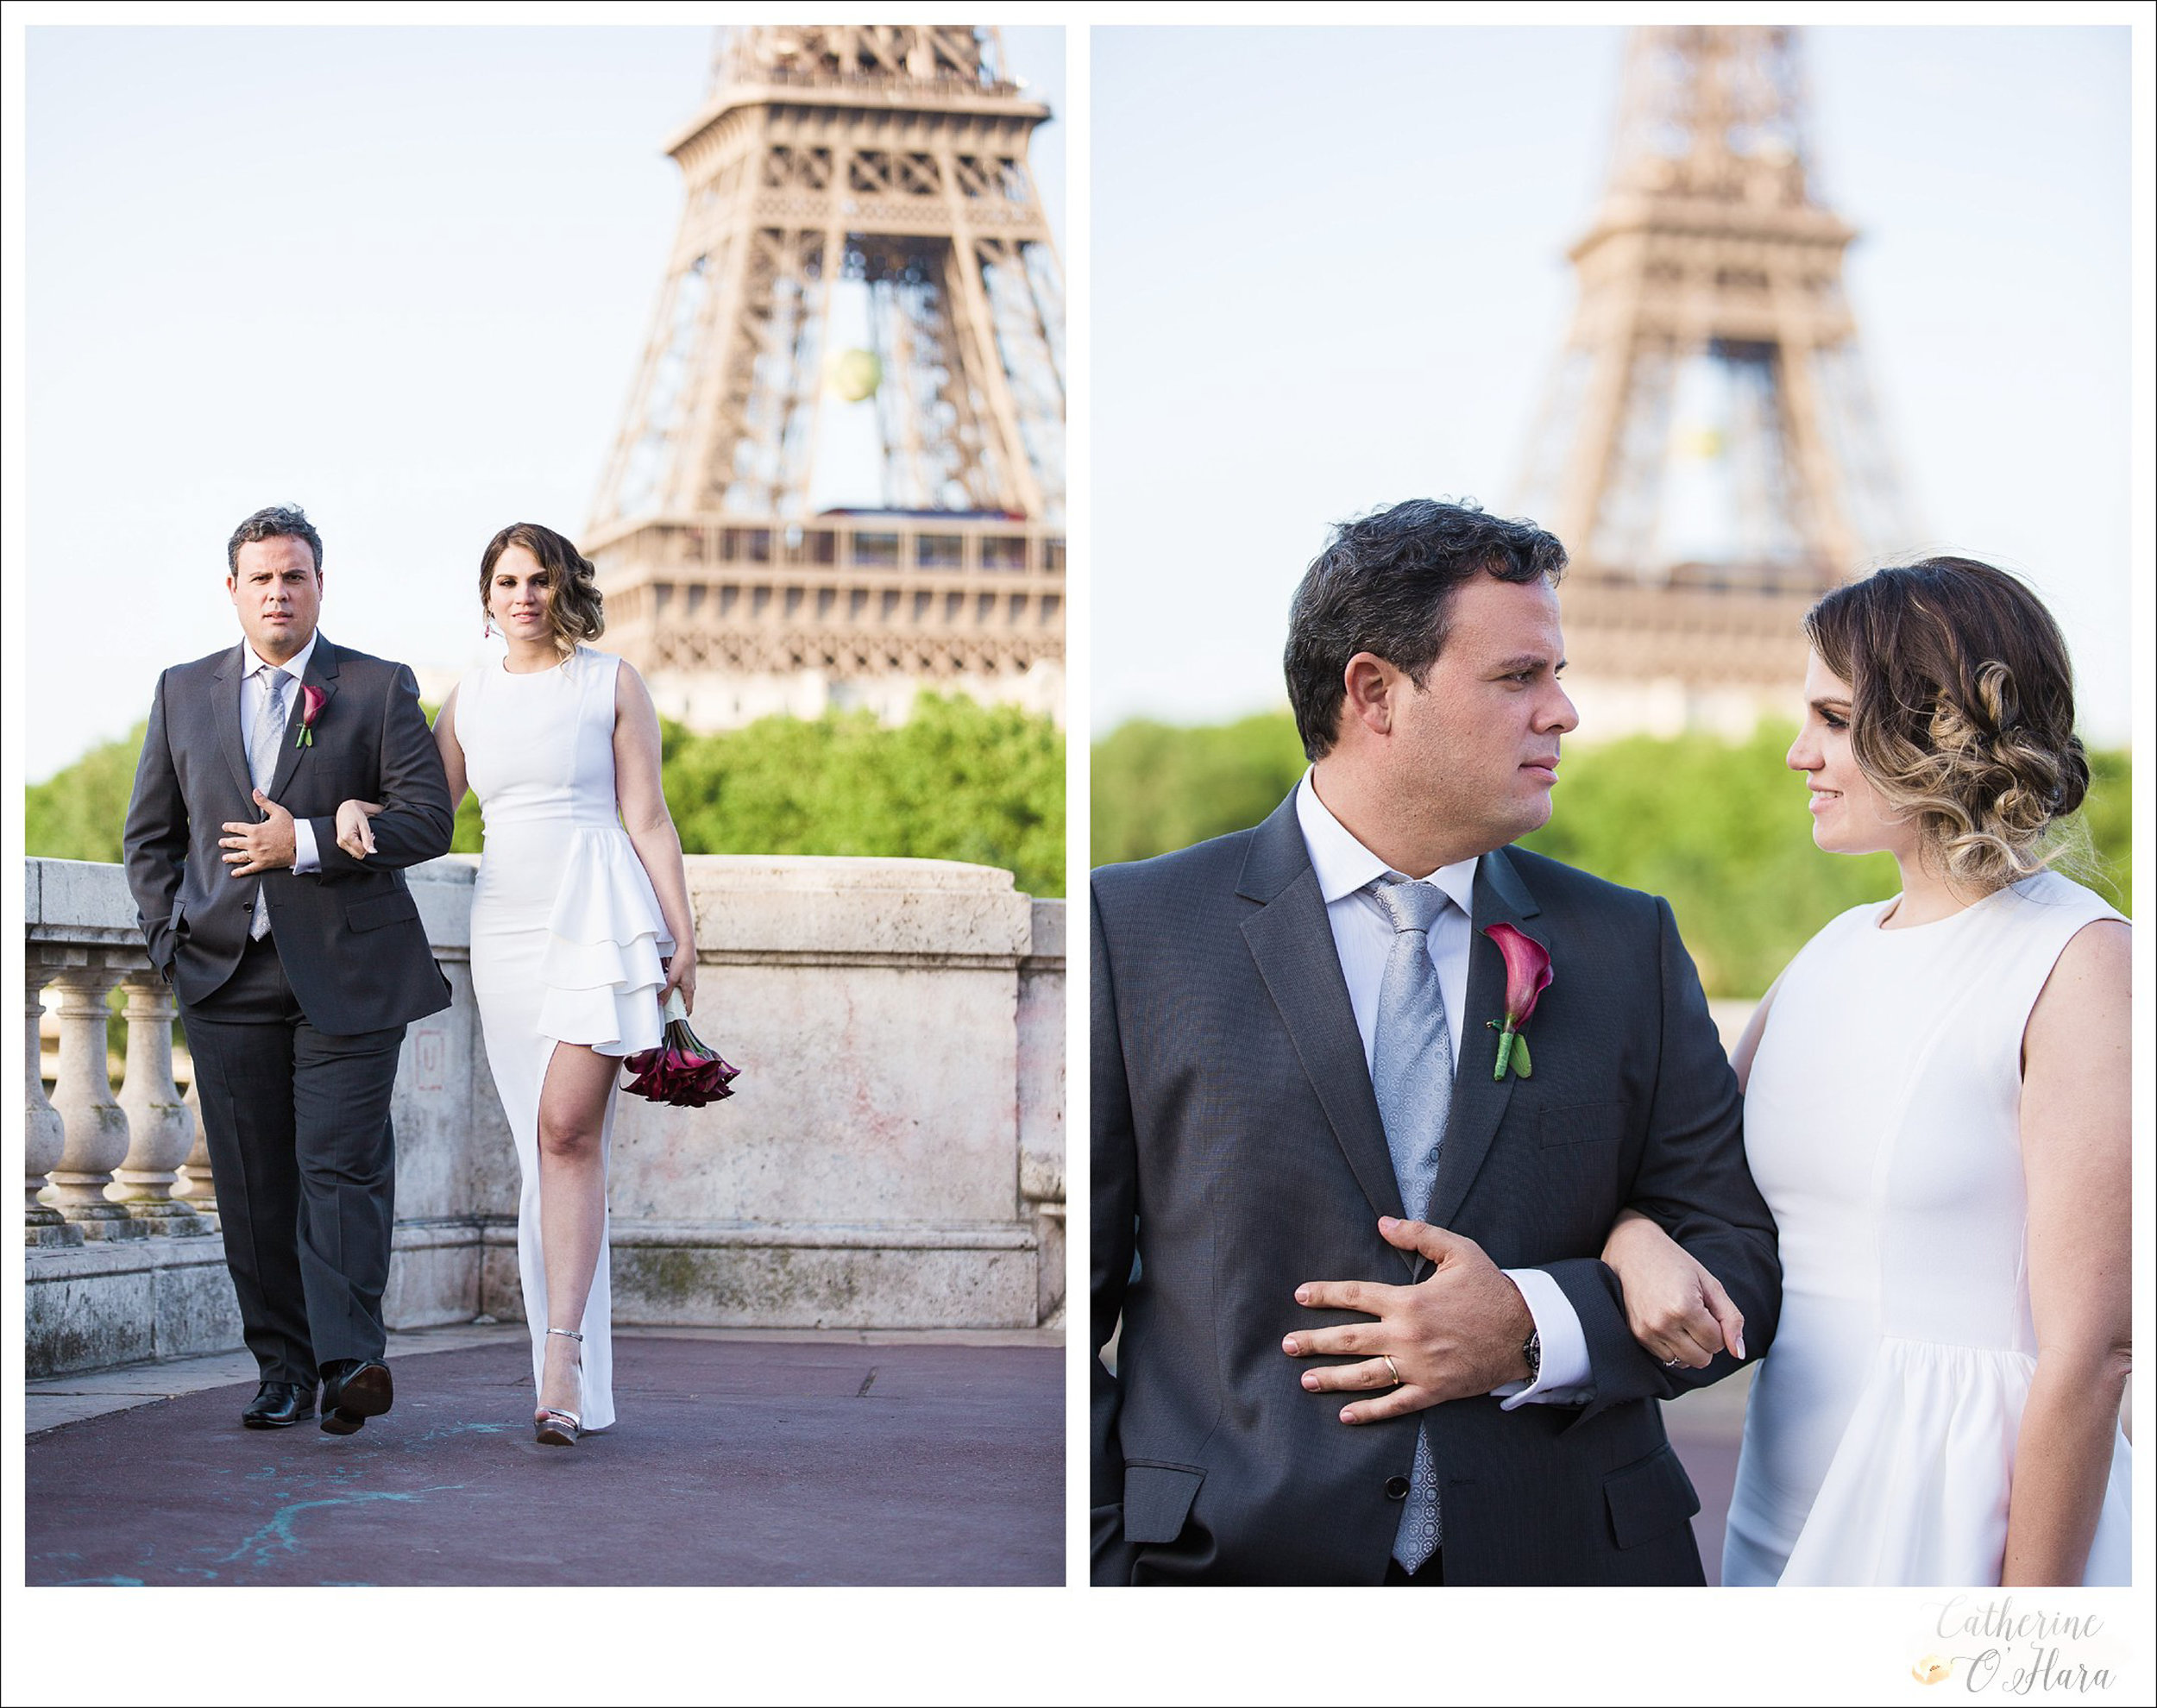 30-paris-france-elopement-photographer.jpg